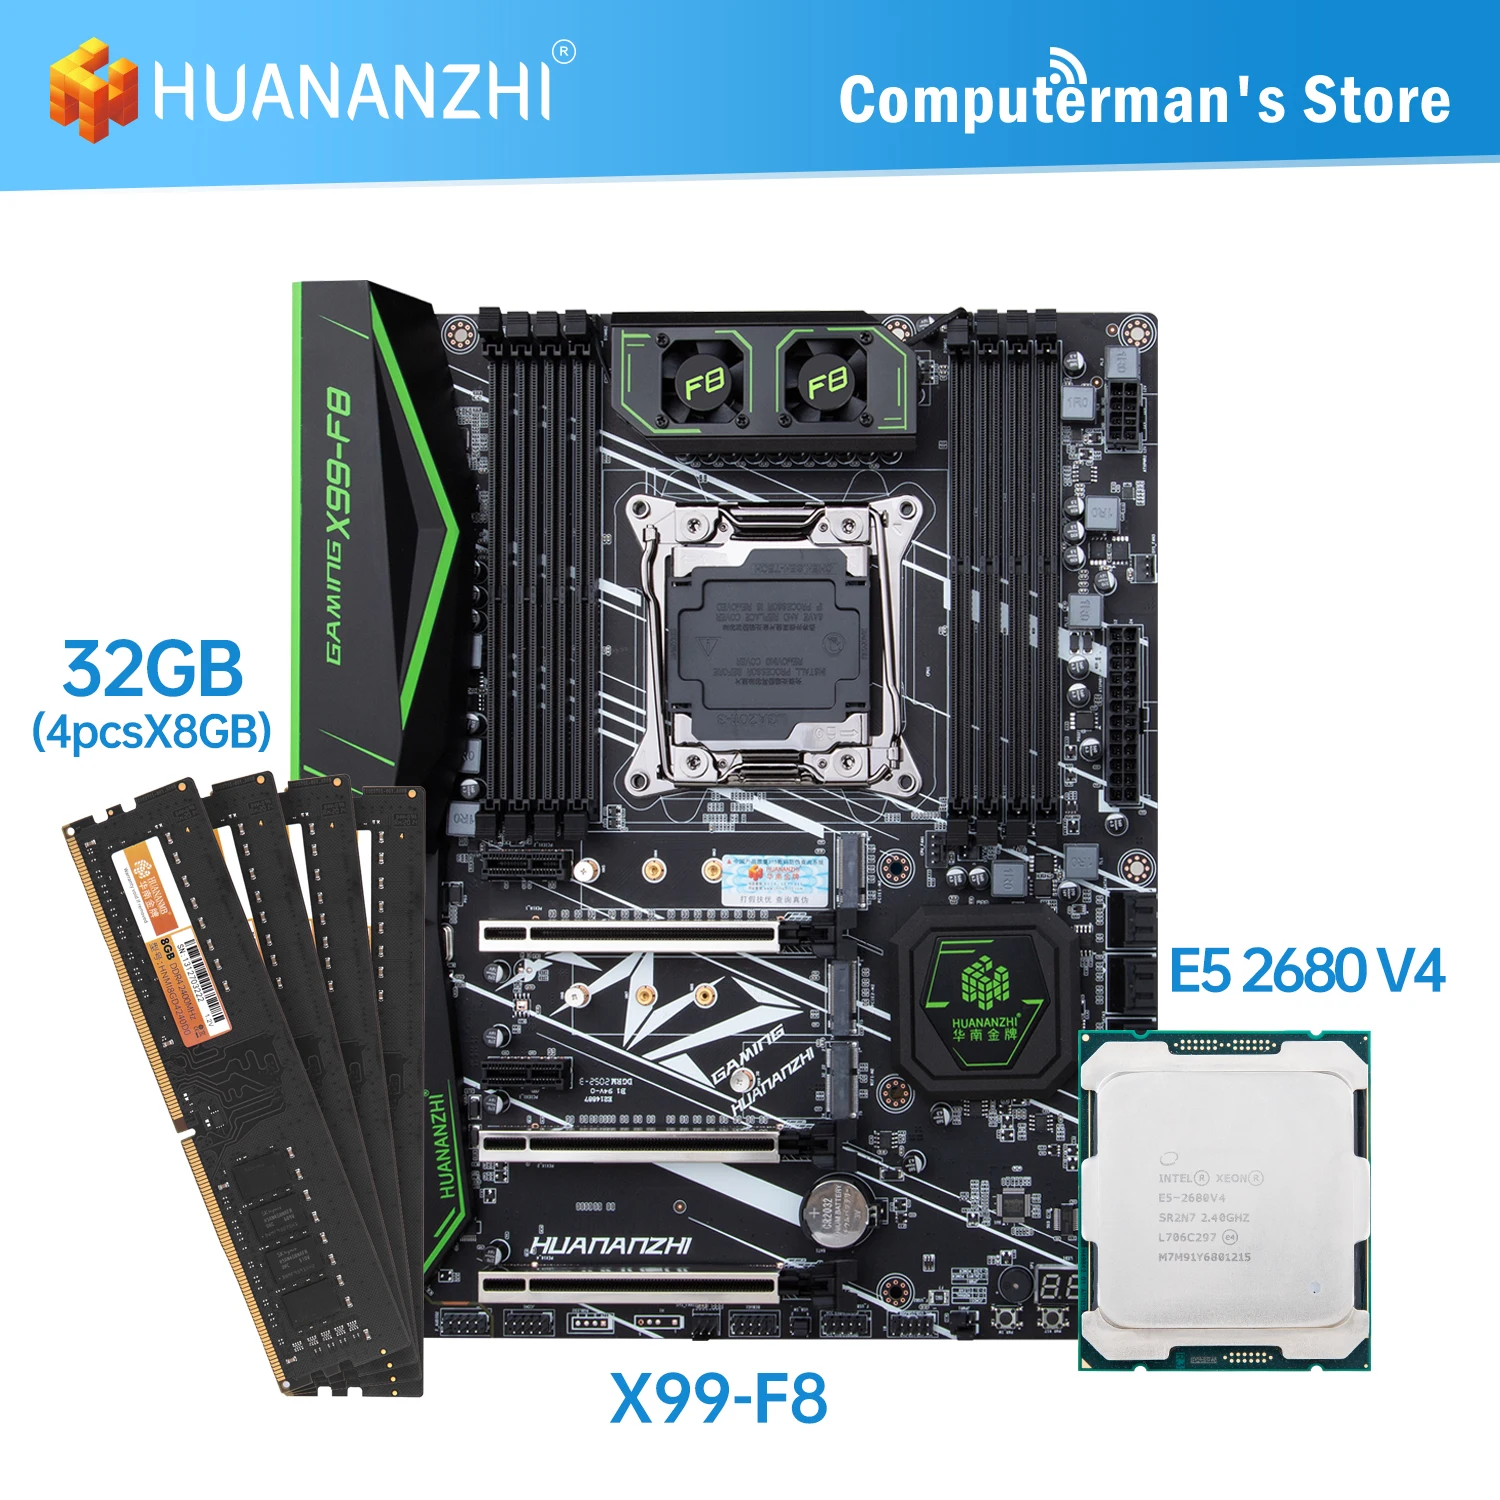 HUANANZHI-Conjunto de placa base X99 F8 X99, CPU Intel XEON E5 2680 V4, Memoria 4x8G DDR4 NON-ECC 2400, Memoria M.2 NVME, USB ATX